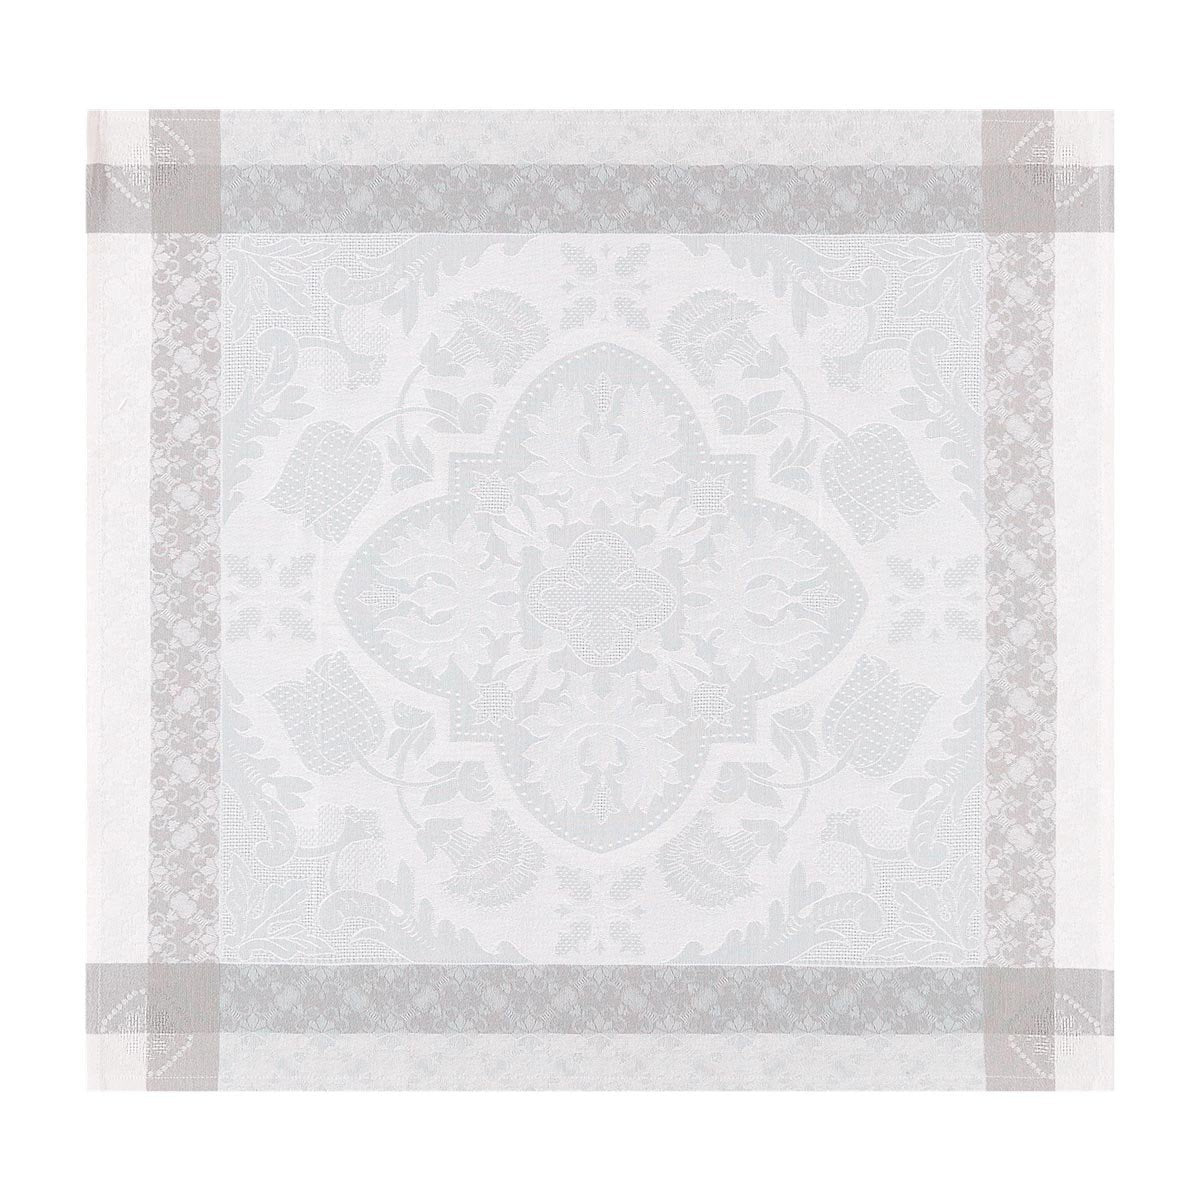 azulejos grey - la jacquard francais - napkin